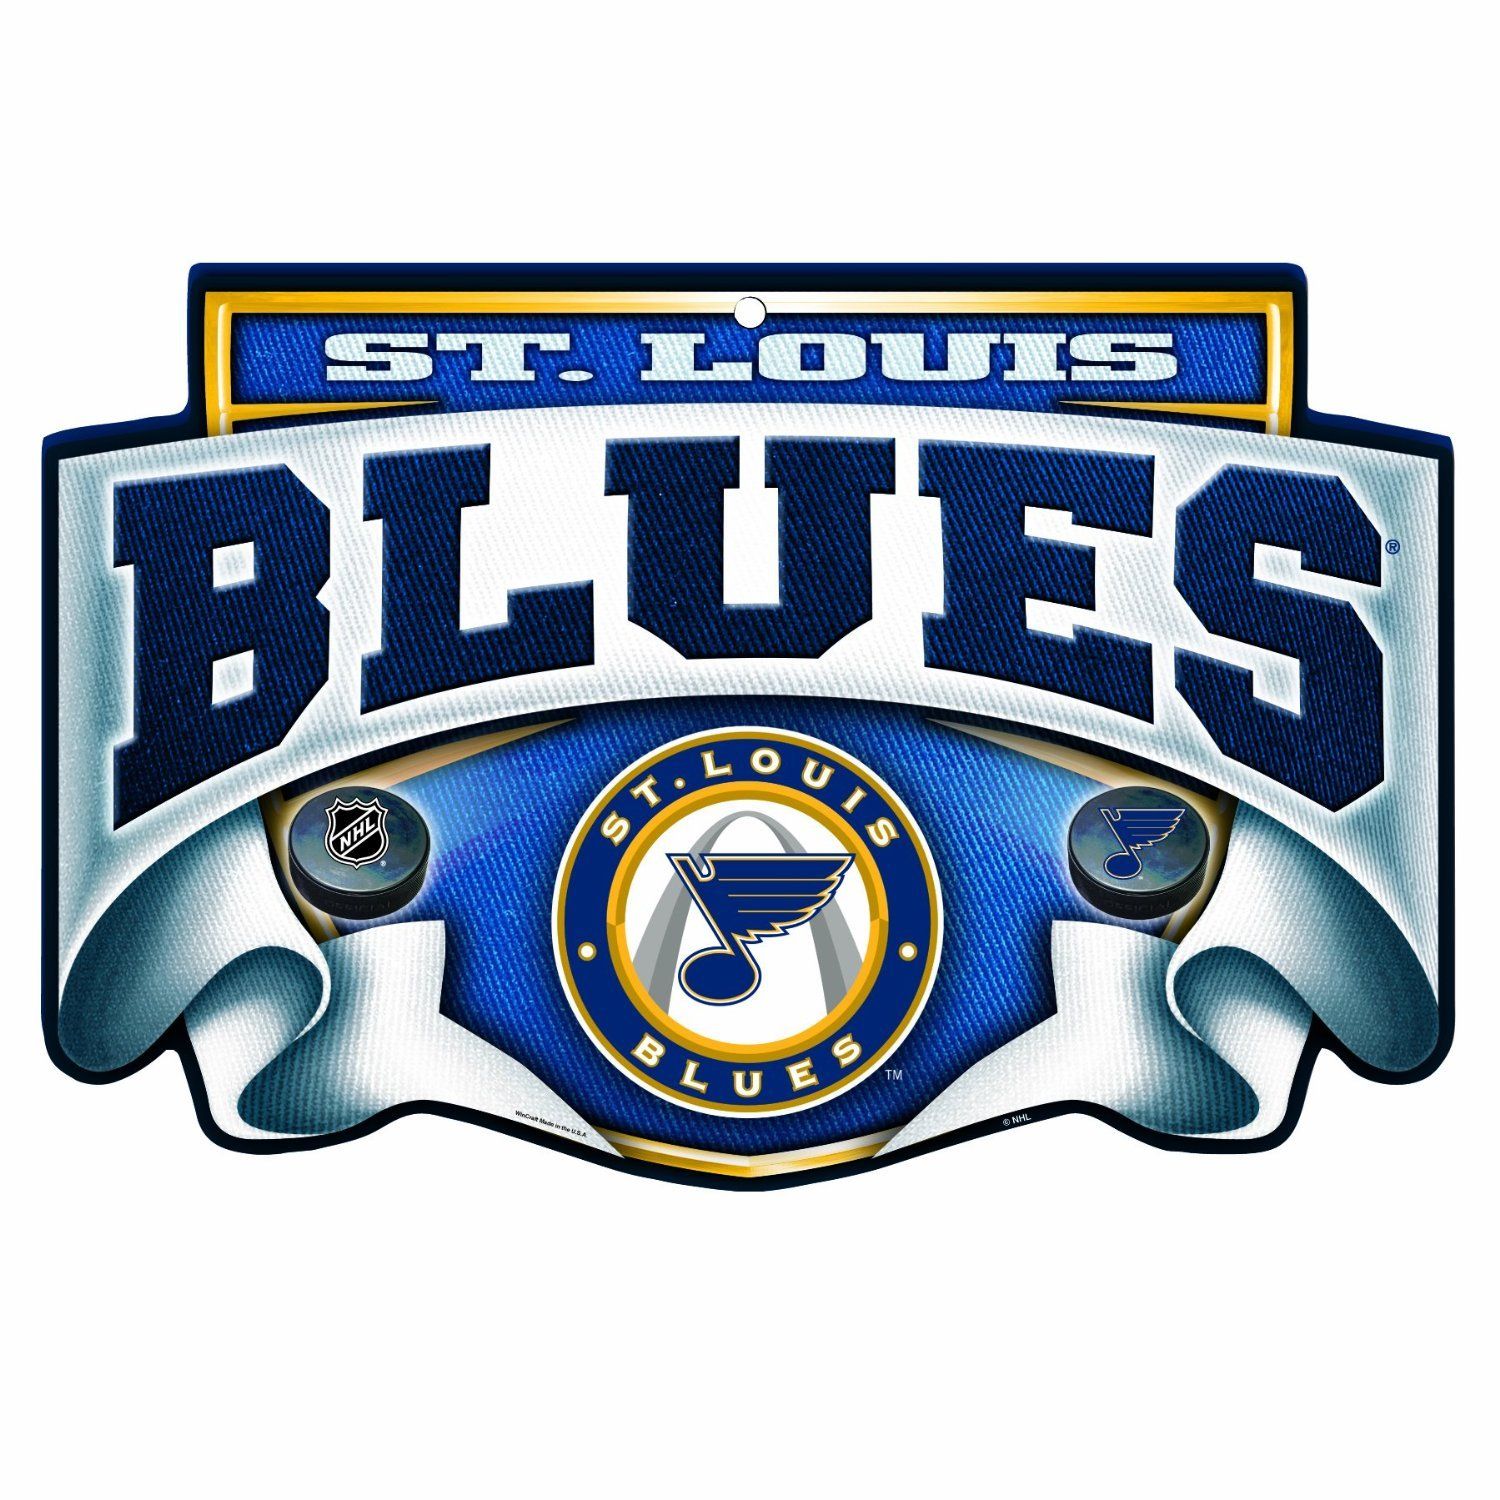 ST-LOUIS-BLUES hockey nhl louis blues (78) wallpaper | 1500x1500 ...